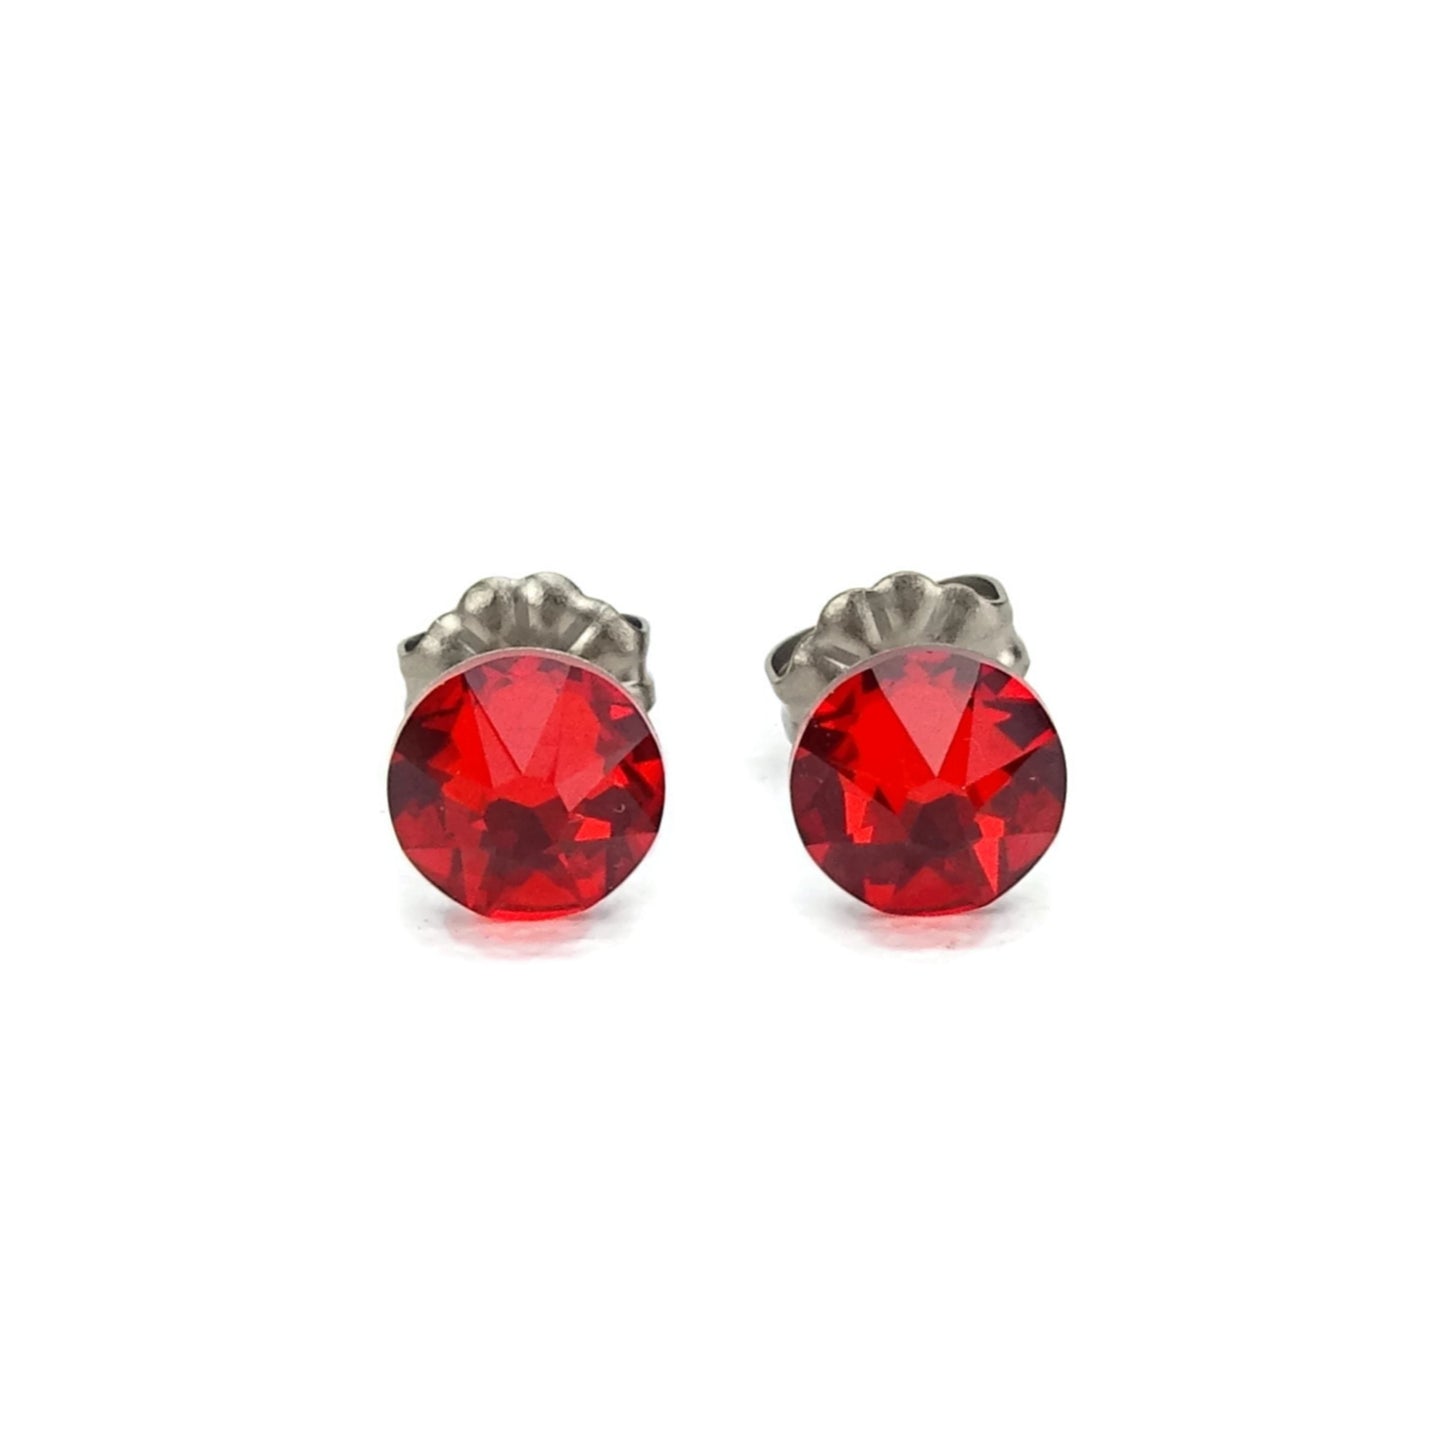 Red Titanium Stud Earrings